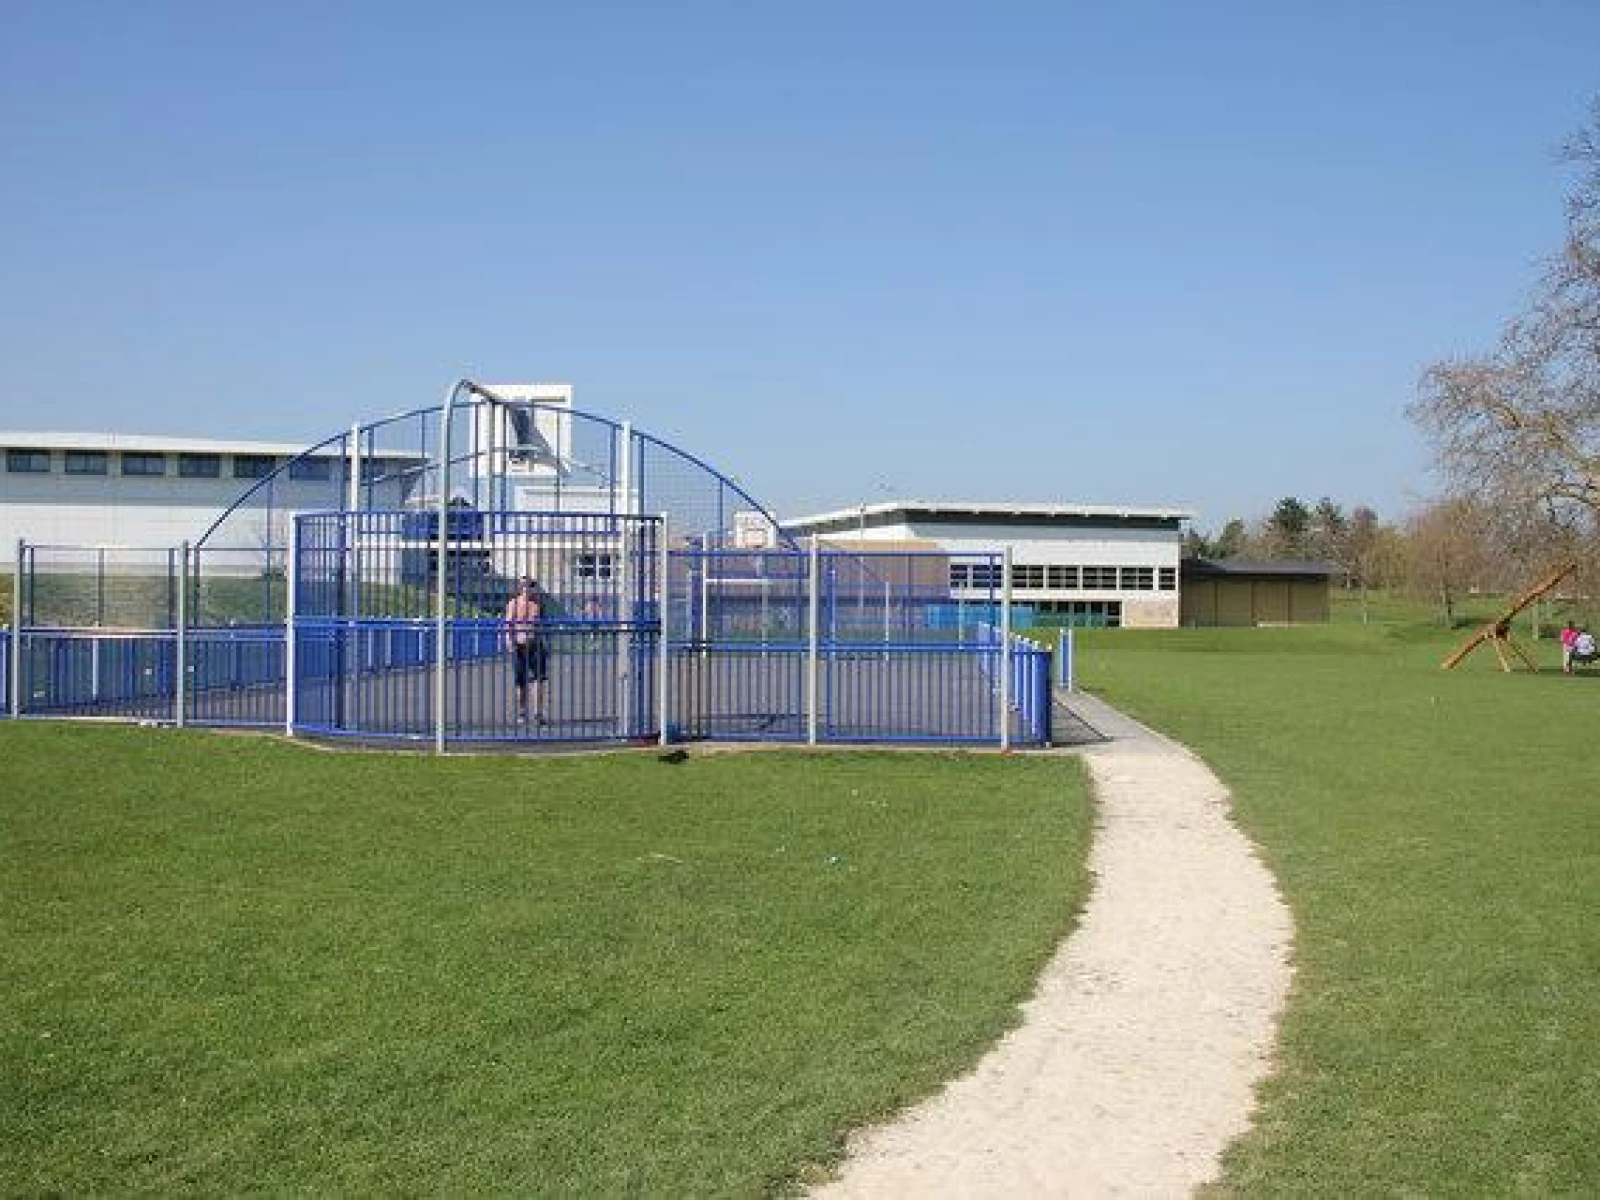 Cheltenham Basketball Court: The Park Court Courts of the World